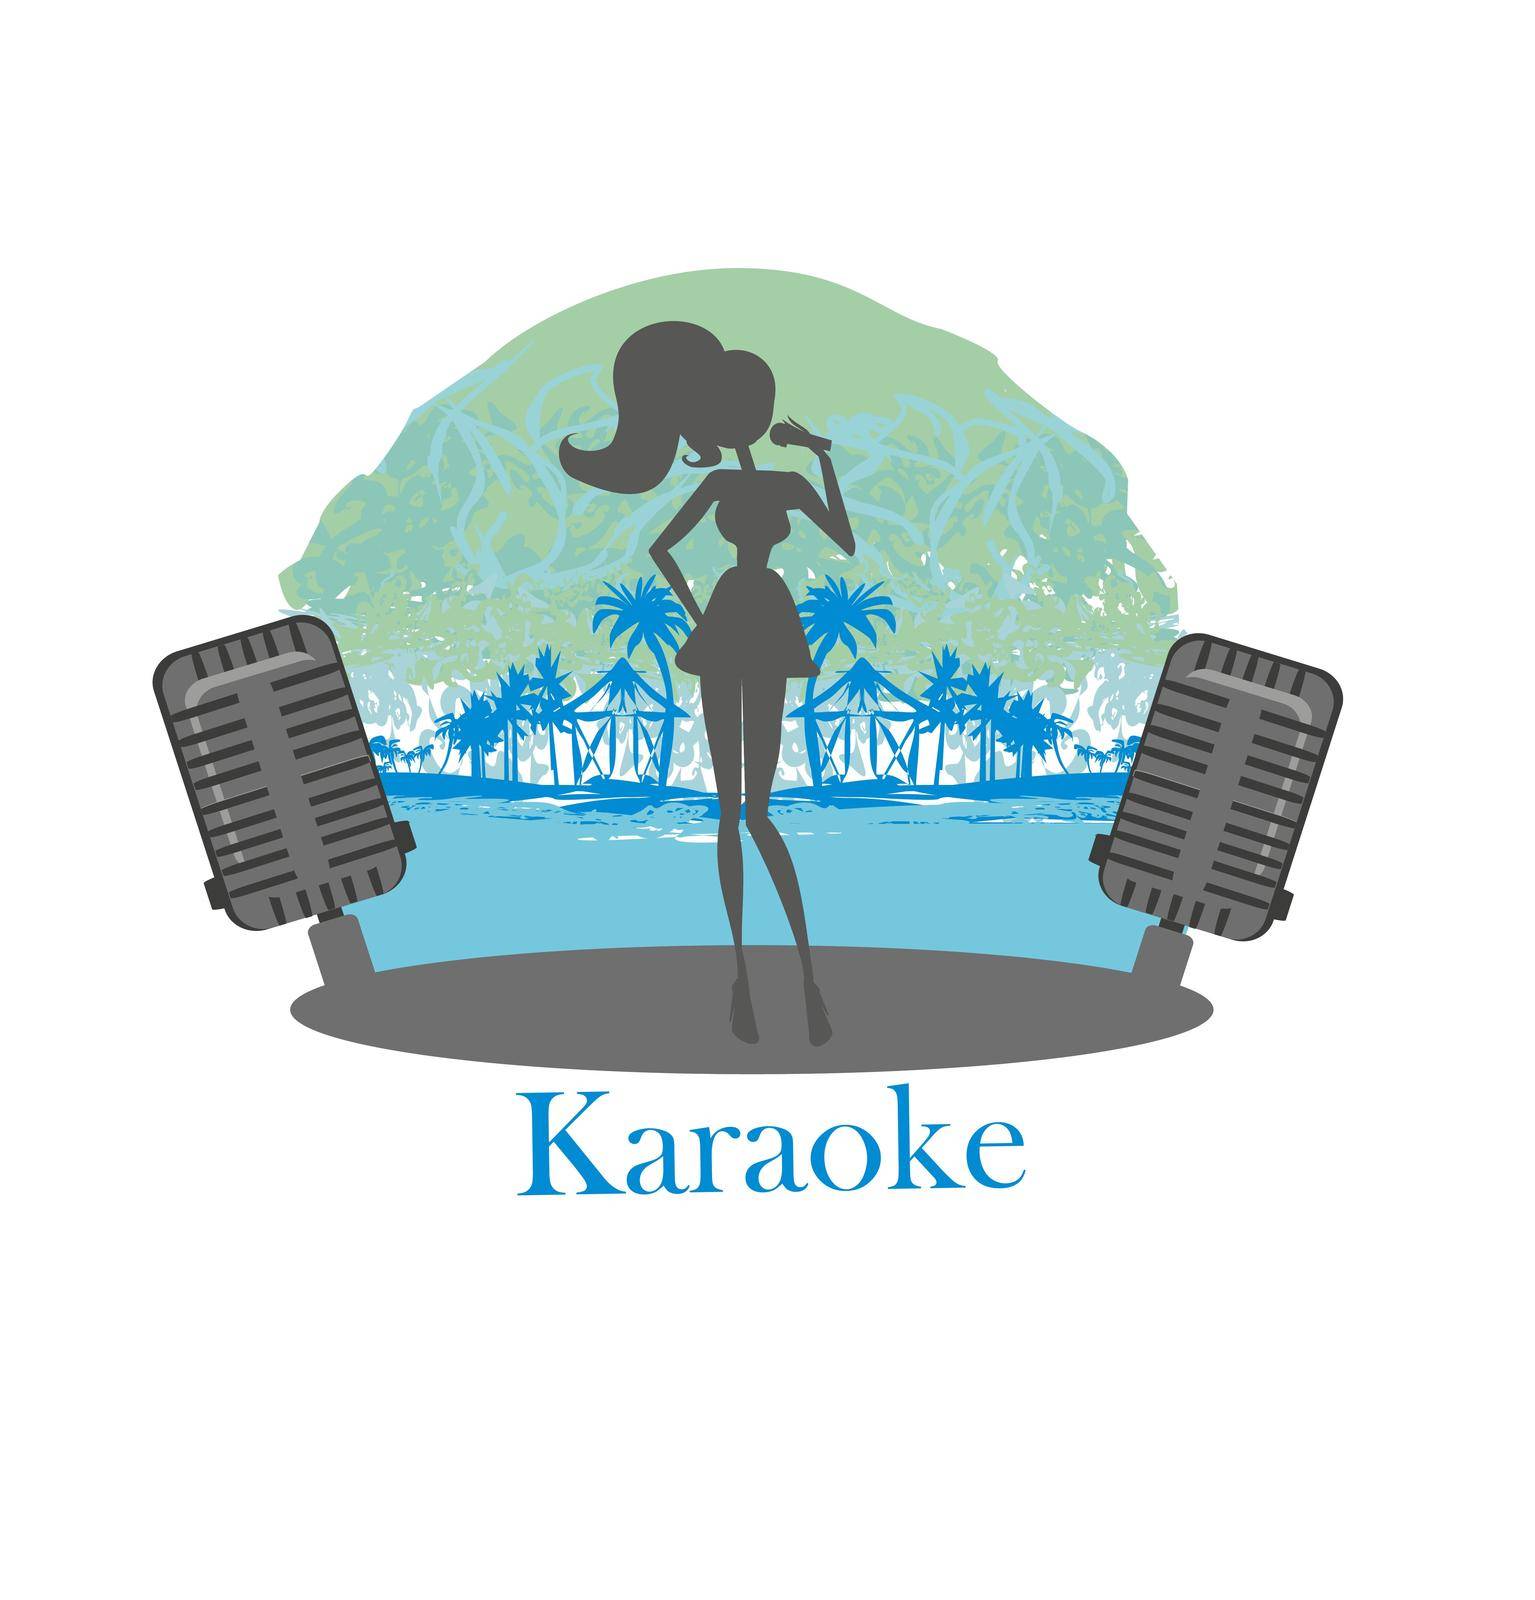 Karaoke night icon by JackyBrown